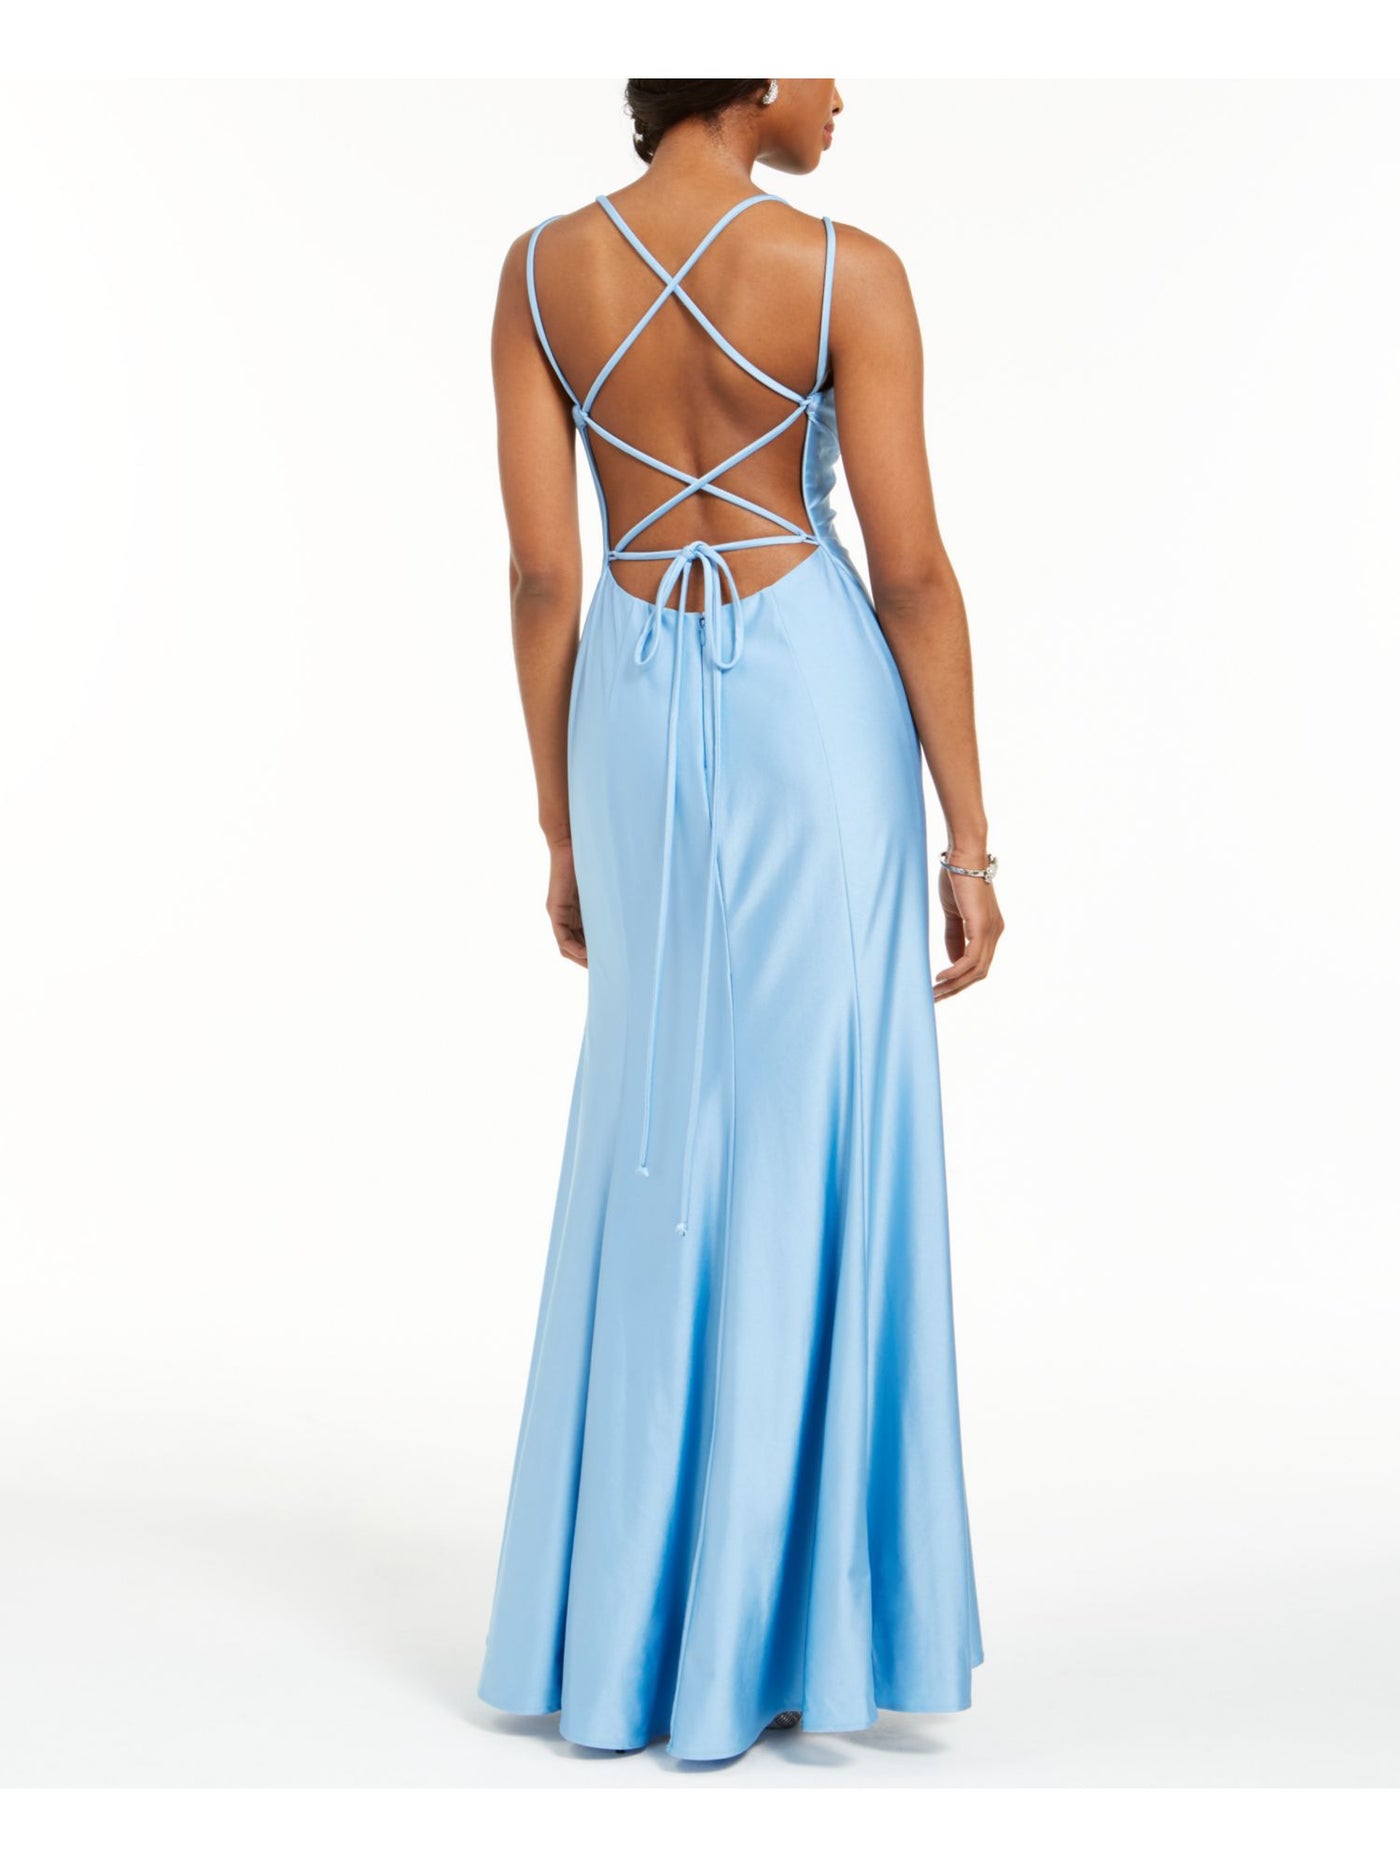 NIGHTWAY Womens Light Blue Spaghetti Strap V Neck Full-Length Evening Empire Waist Dress 14